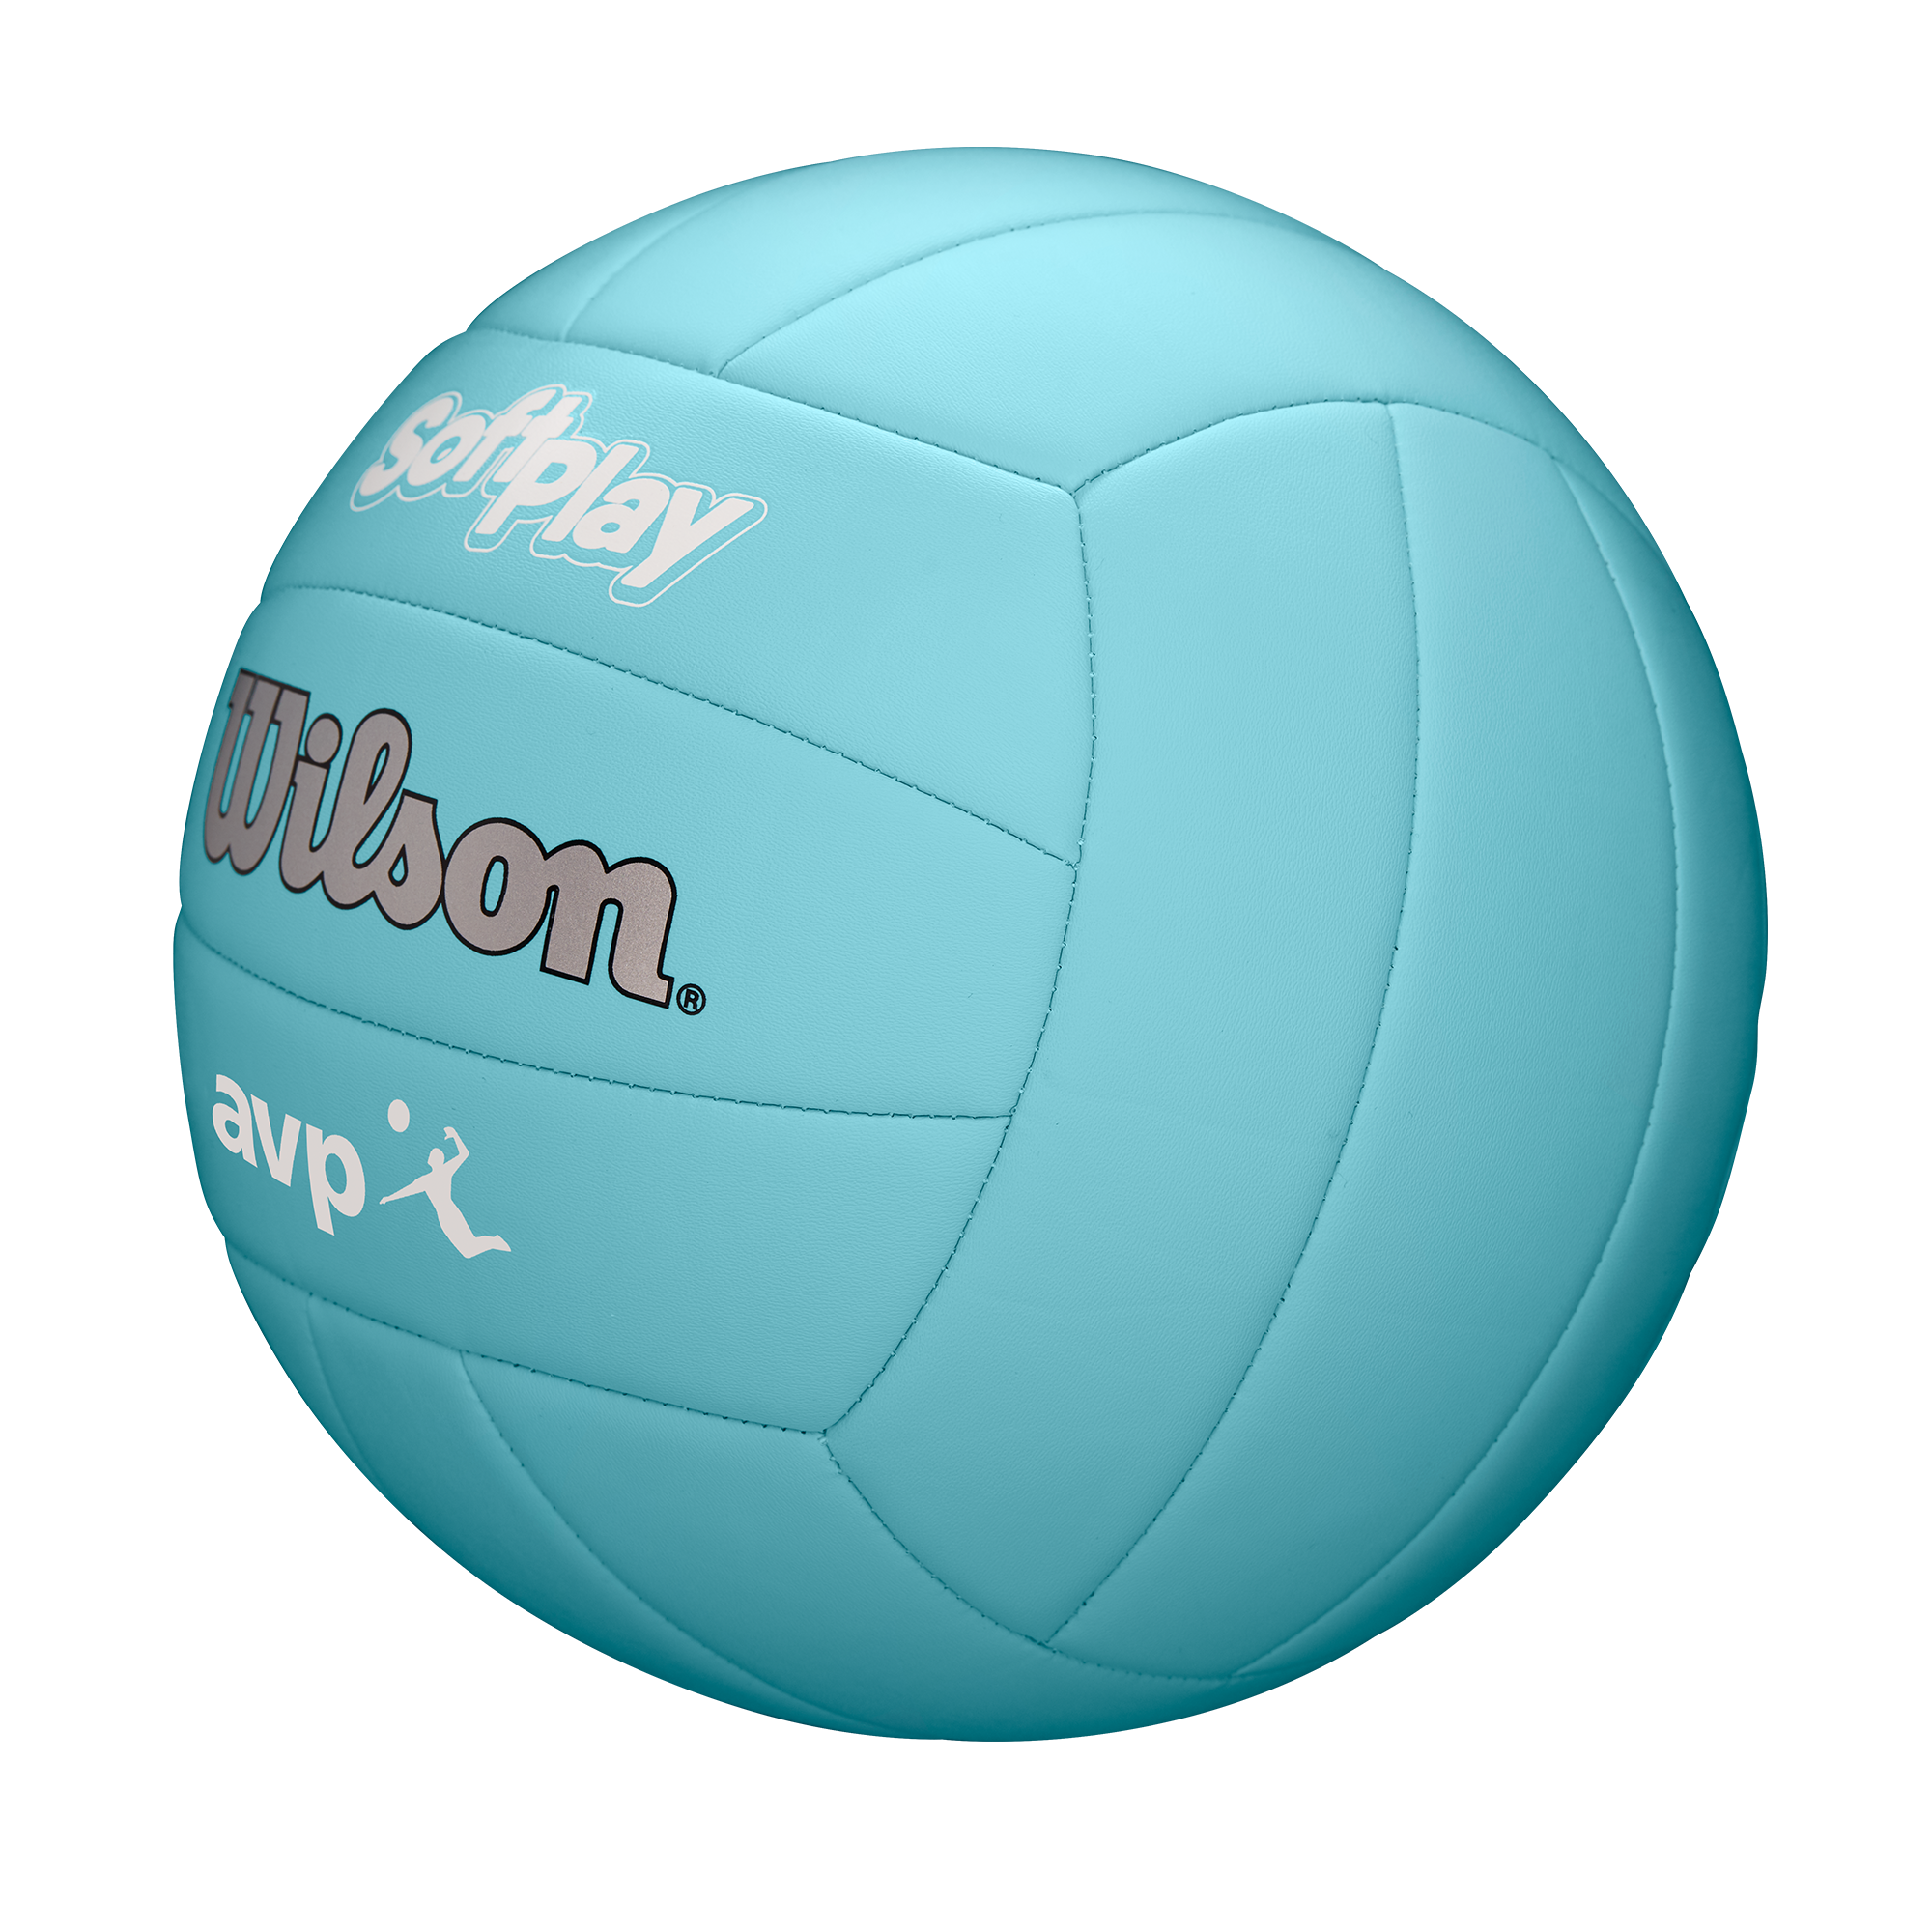 Wilson AVP Soft Play Volleyball